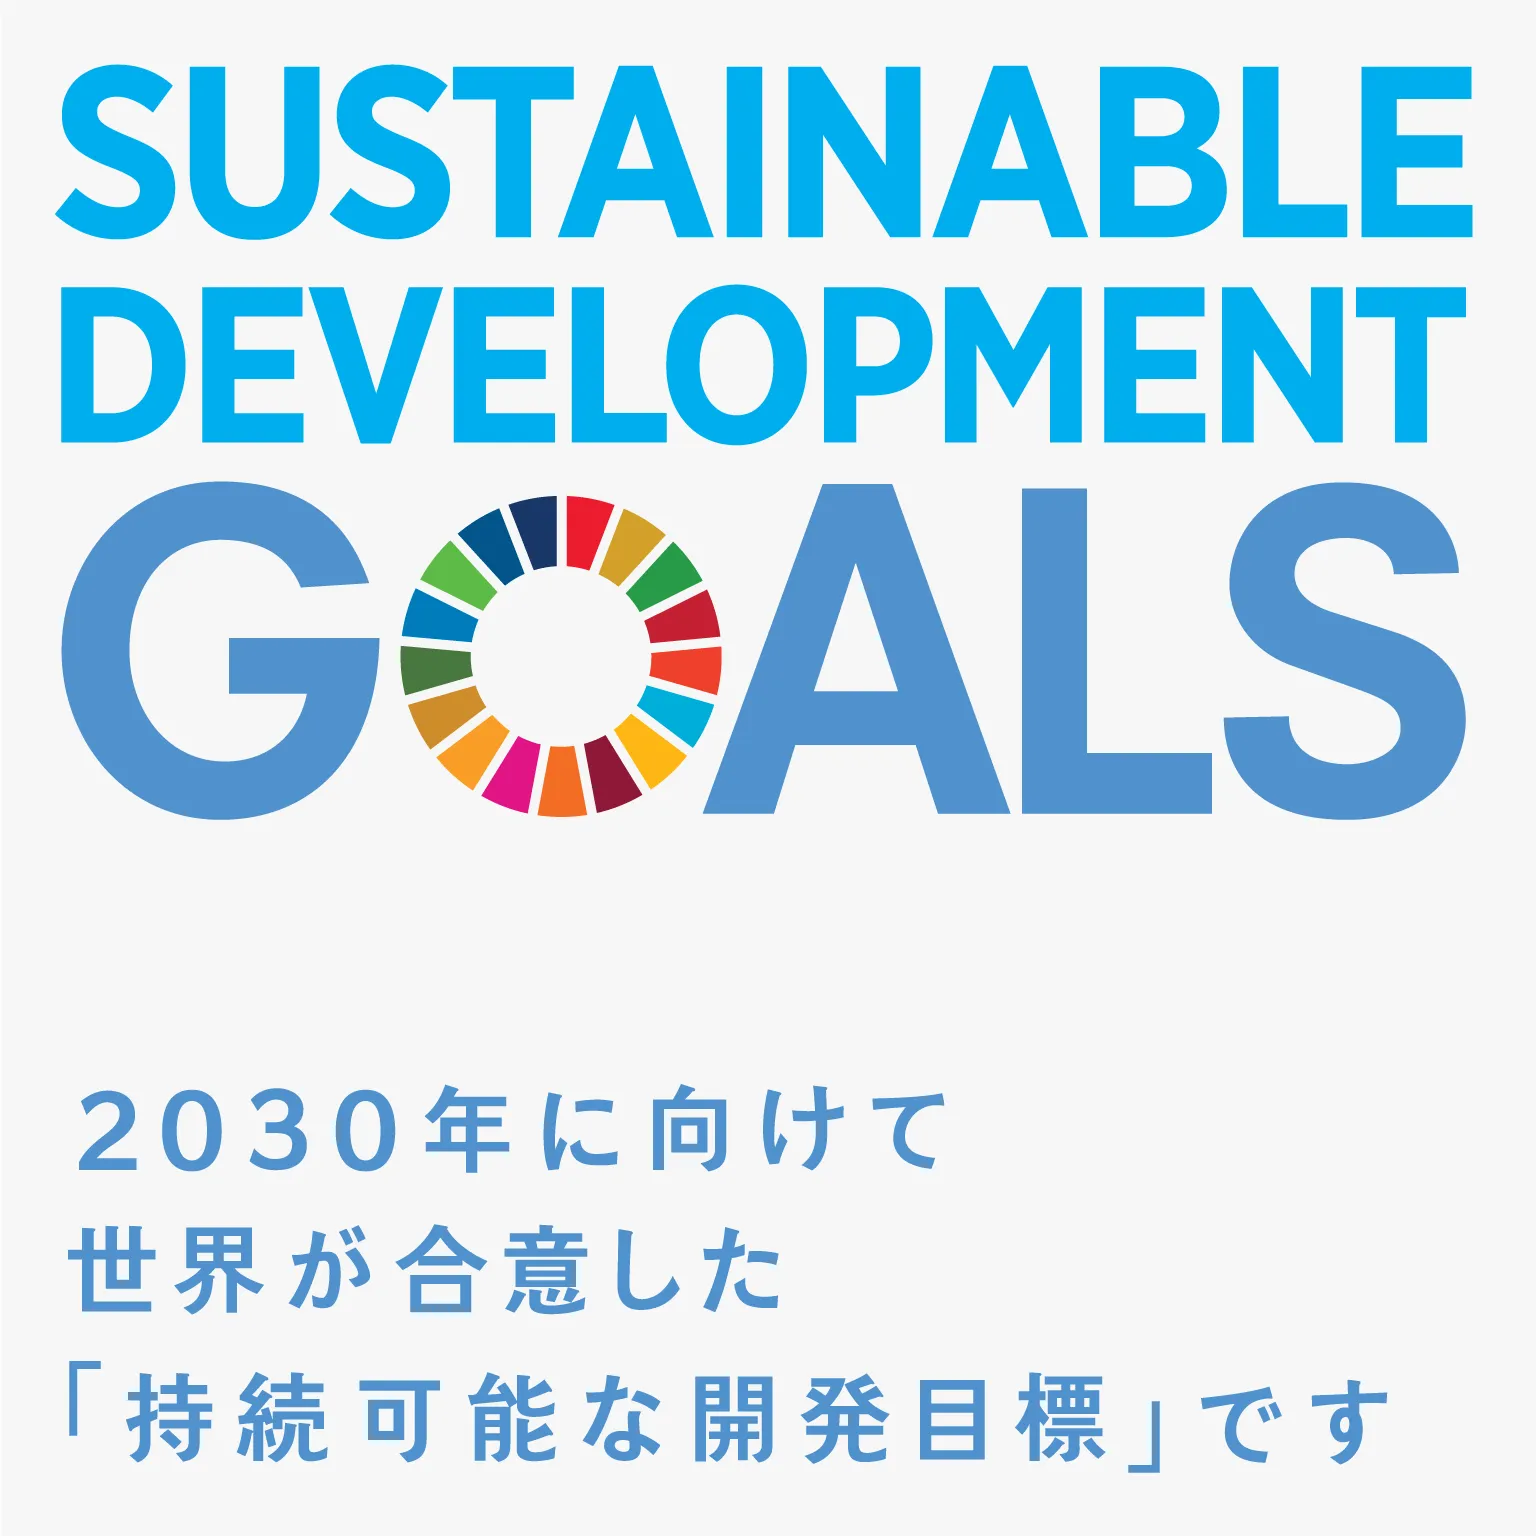 SDGsは、2030年に向けて世界が合意した「持続可能な開発目標」です